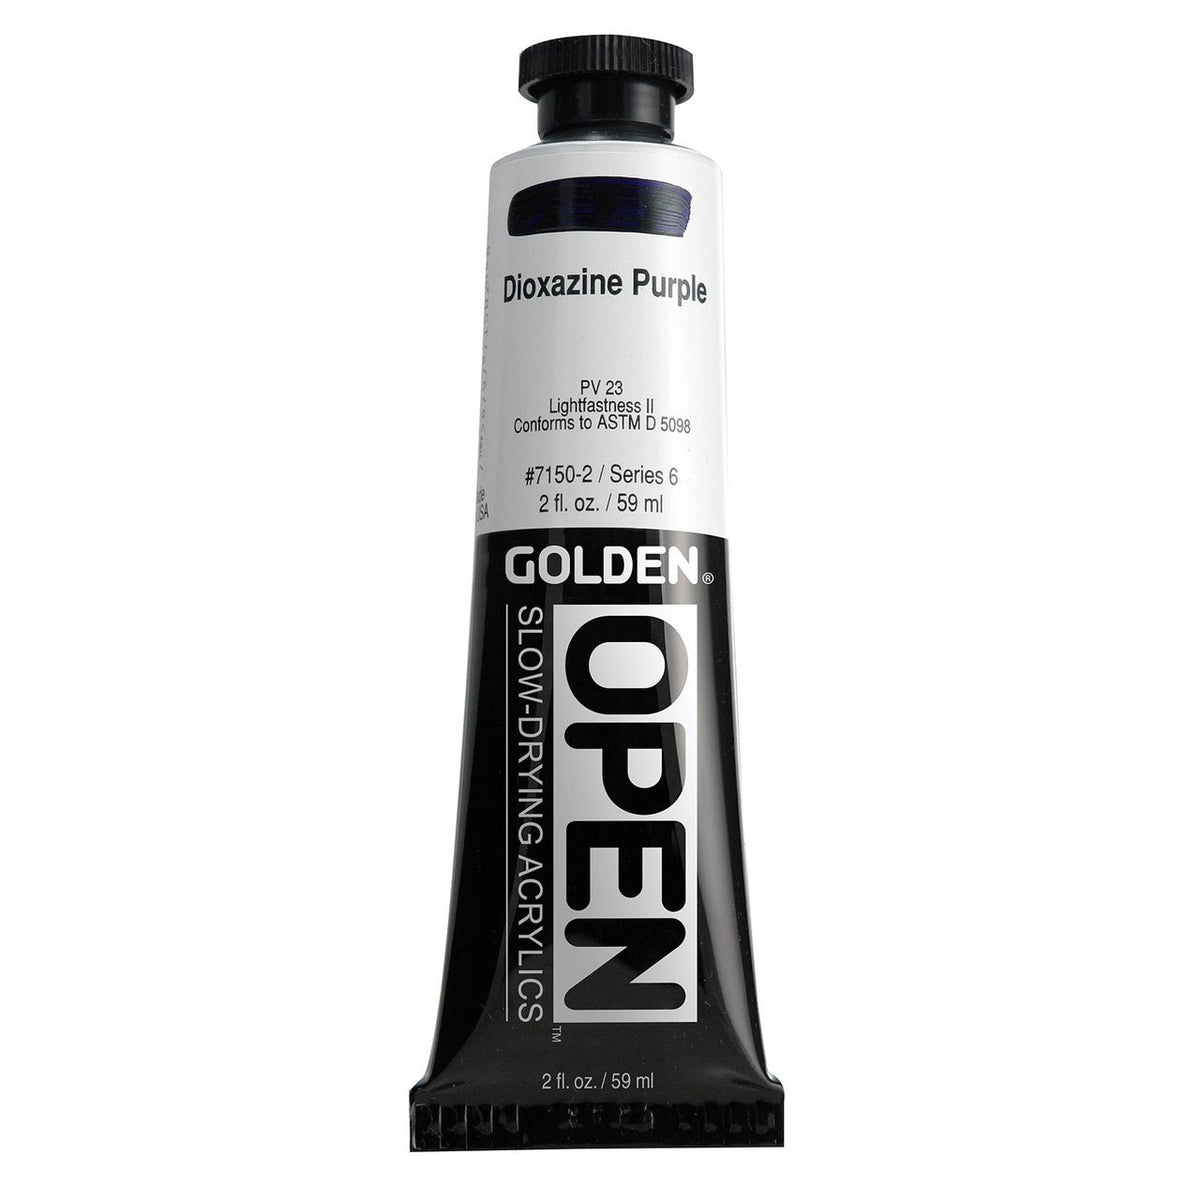 Golden OPEN Acrylic Dioxazine Purple 2 oz - merriartist.com